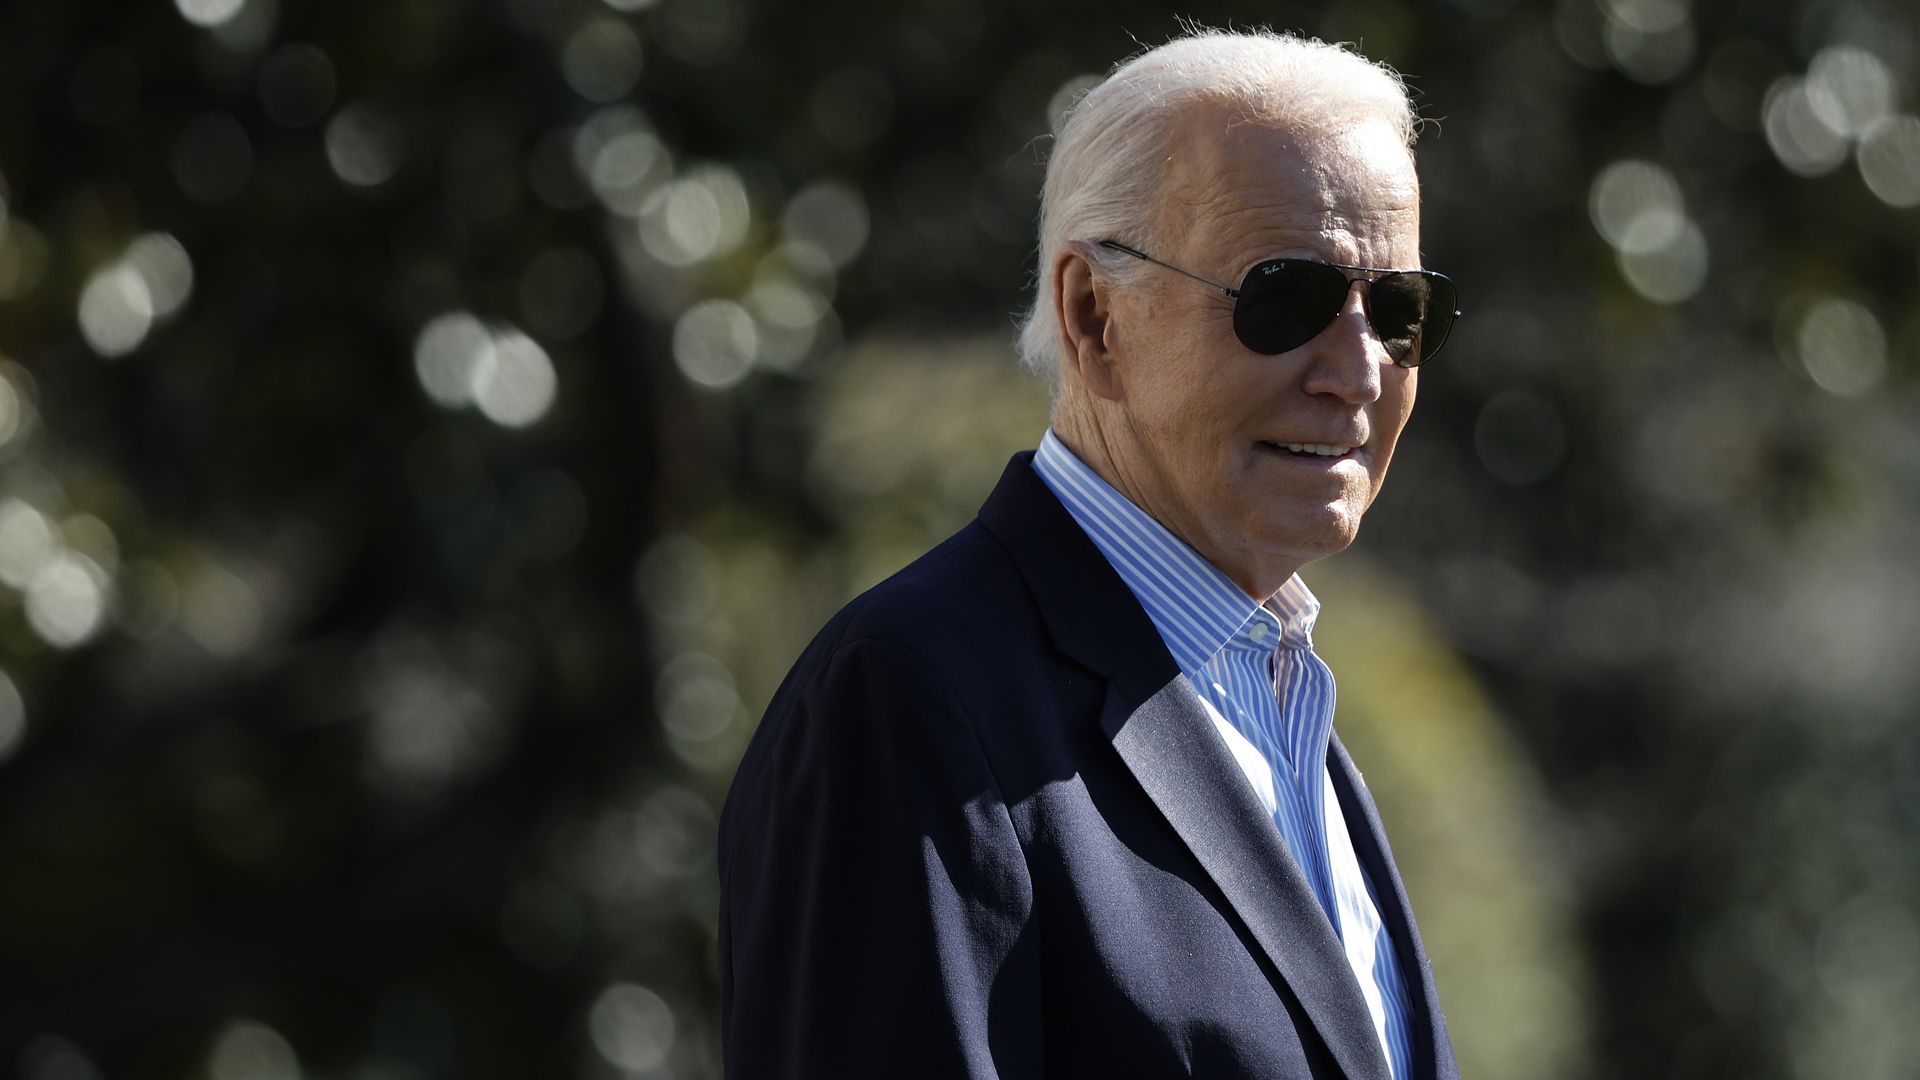 Joe Biden in sun glasses